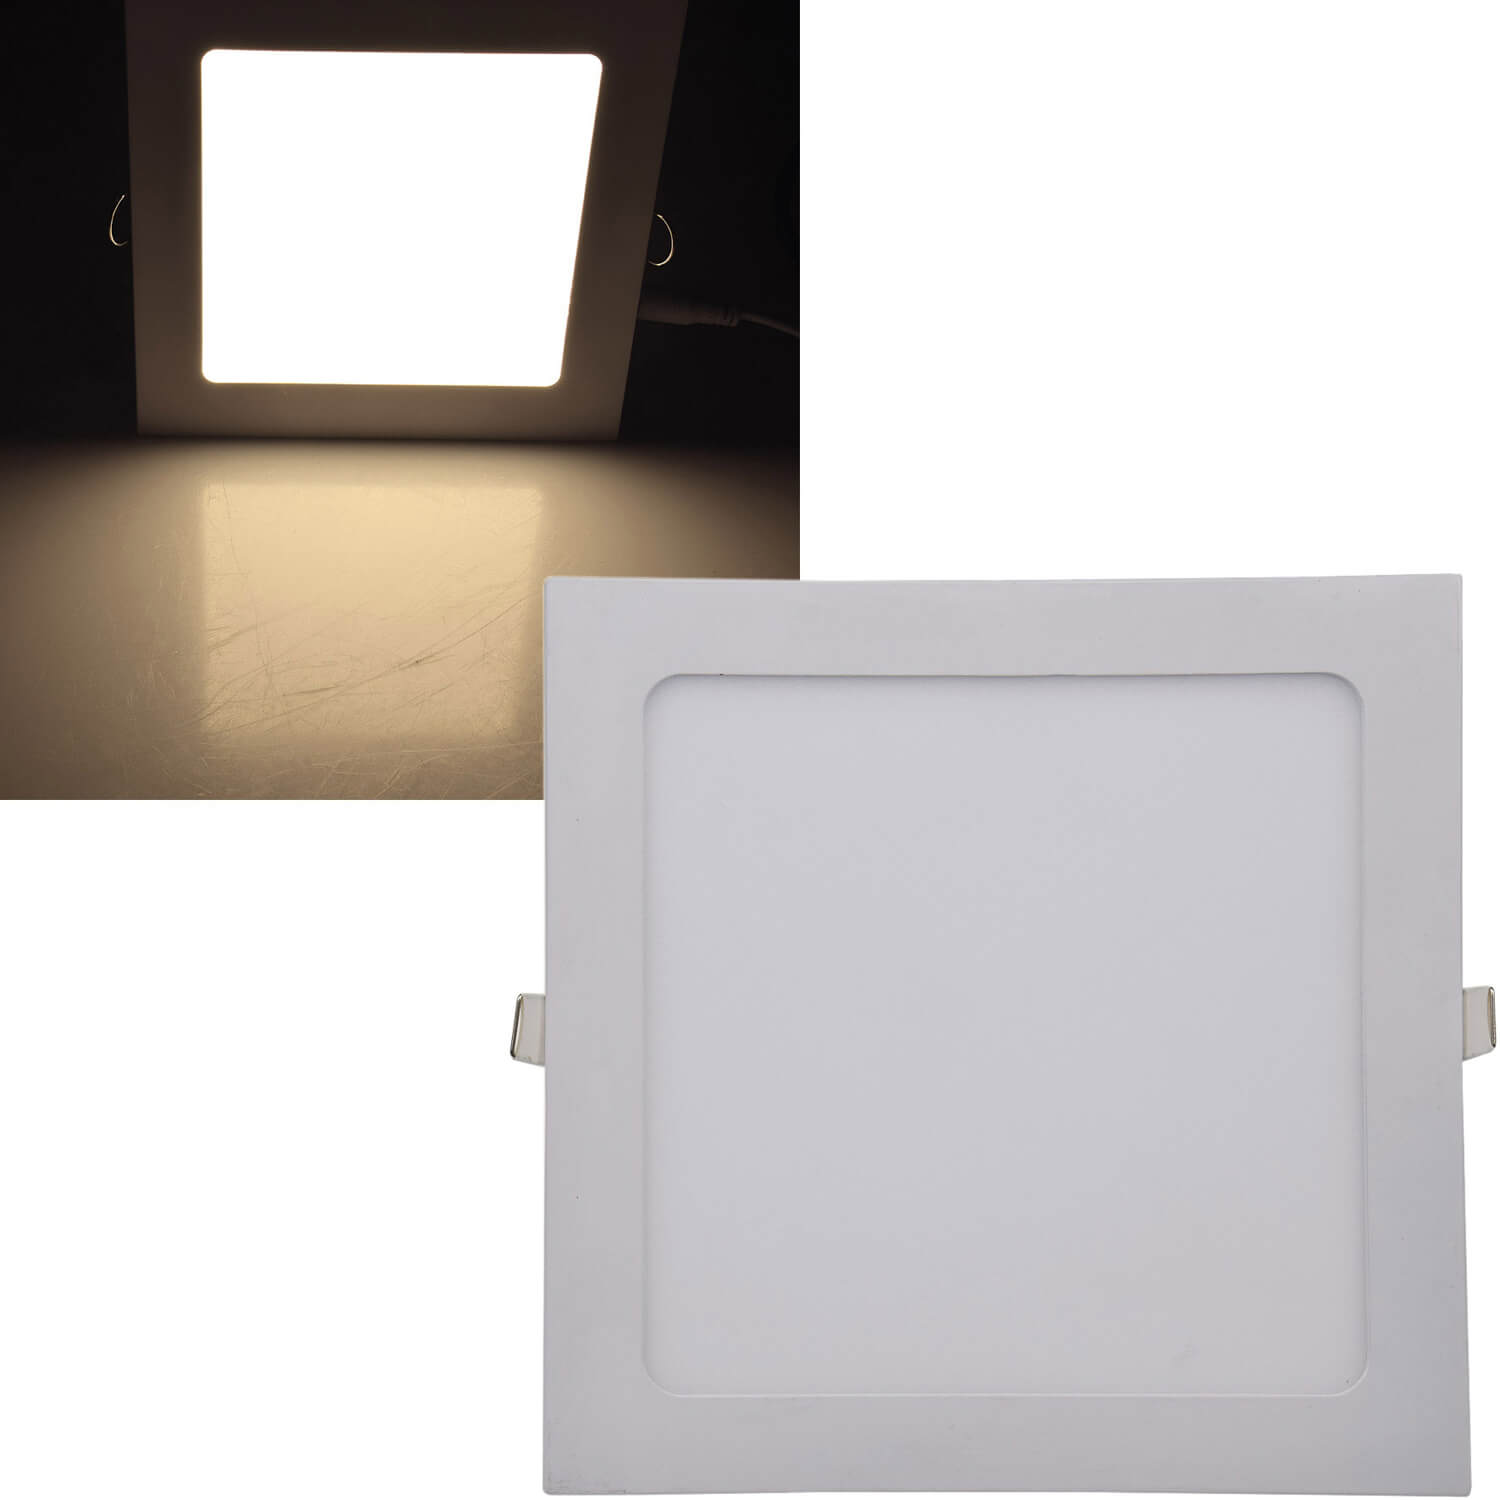 LED Licht-Panel "QCP-22Q", 22,5x22,5cm, 230V, 18W, 1300 Lumen, 2900K / warmweiß